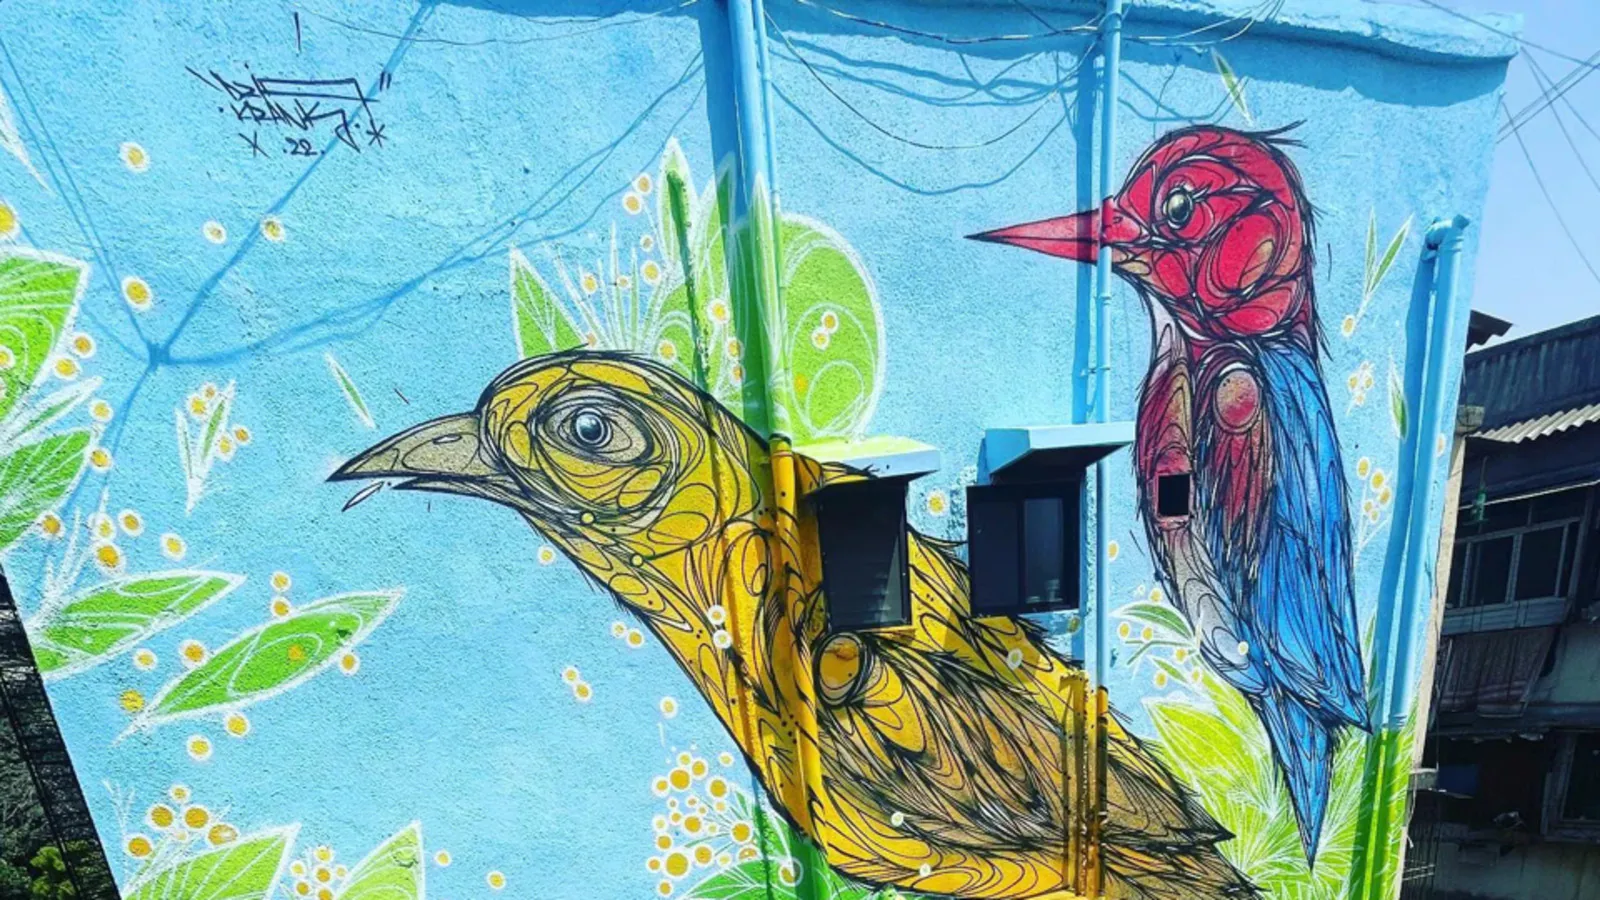 Mahim’s streets come alive with gigantic bird murals